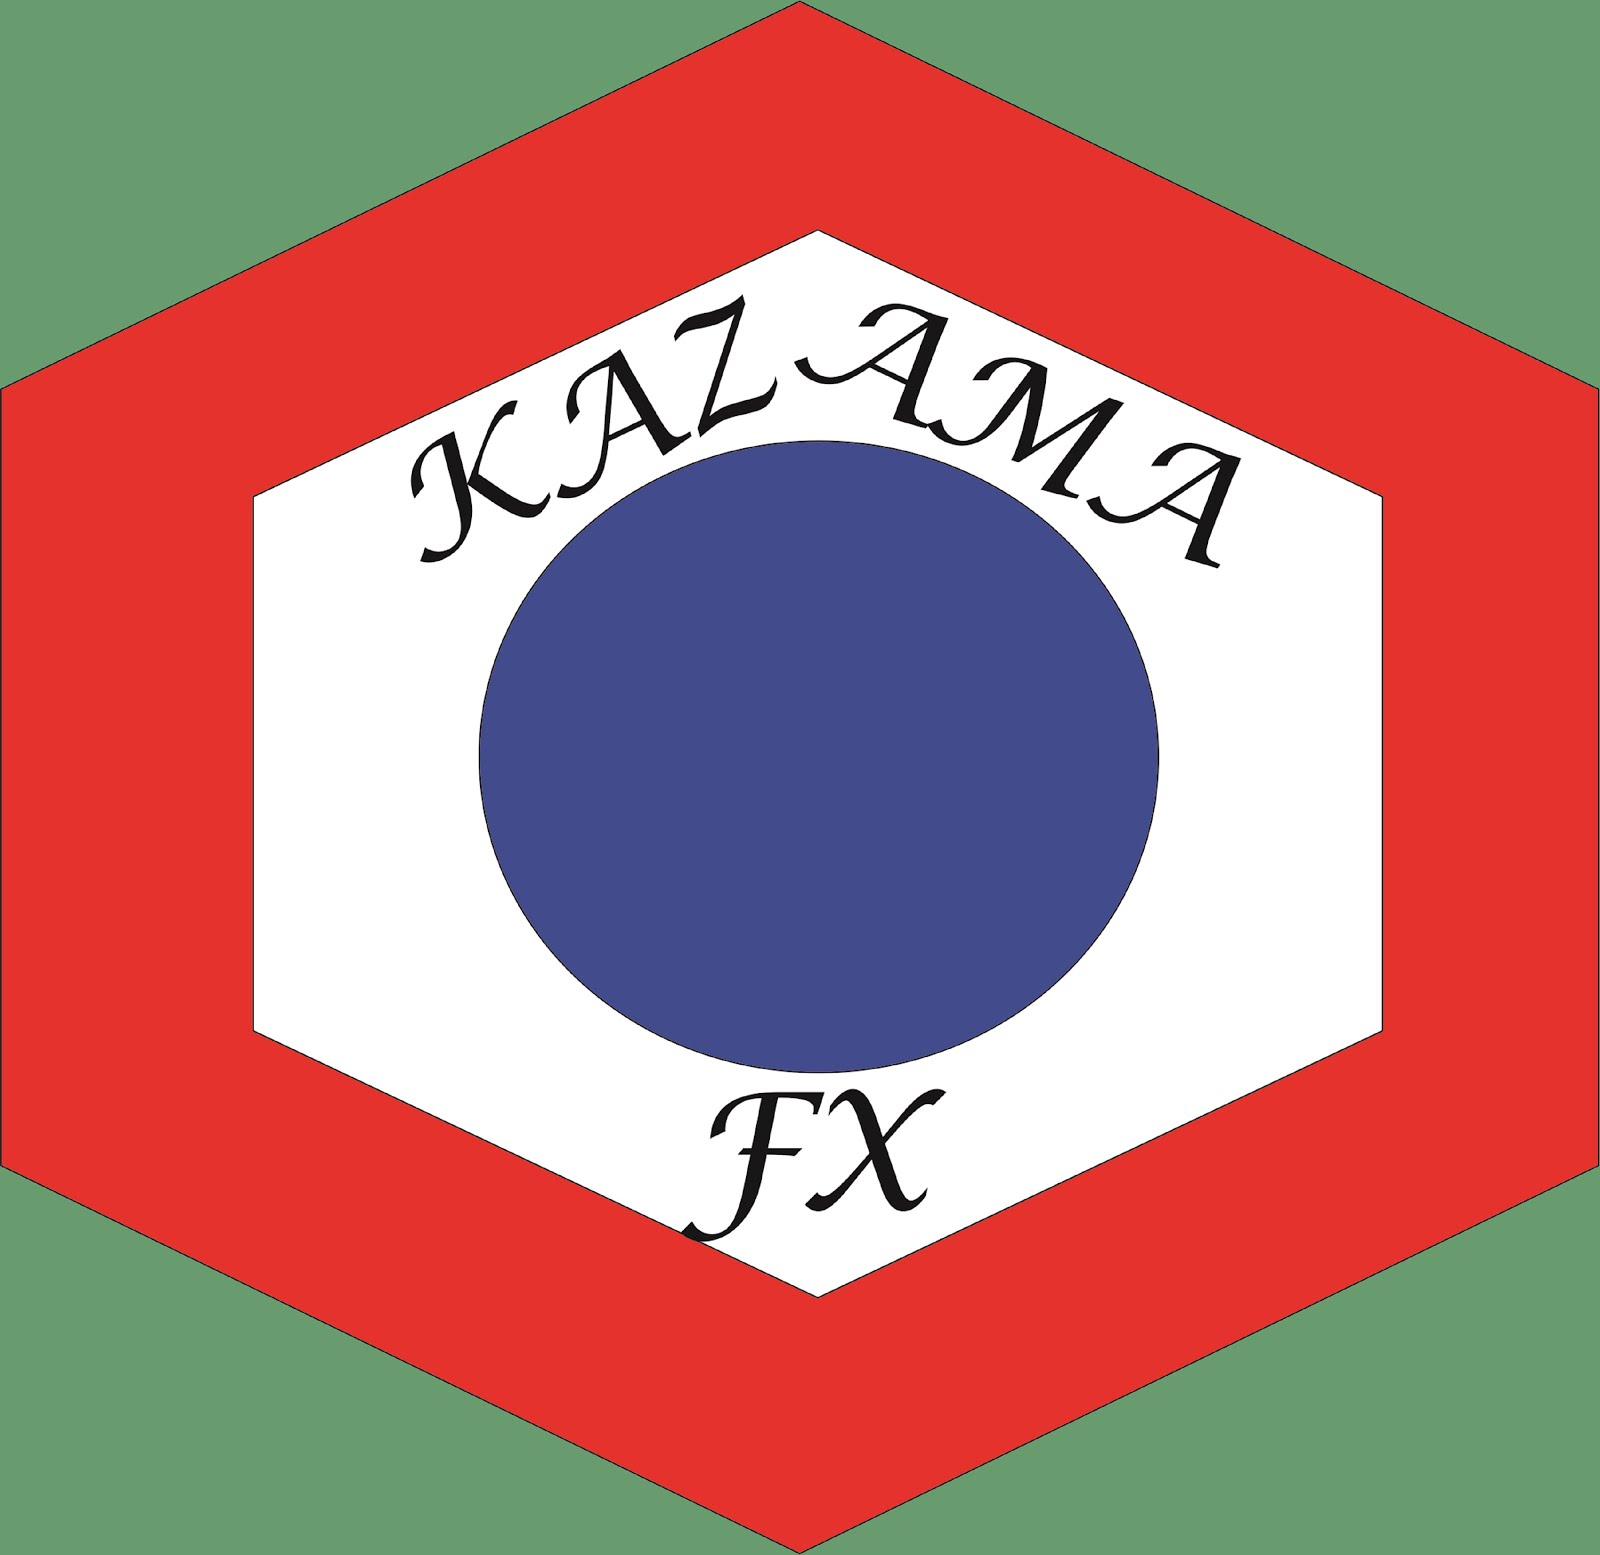 Kazama FX